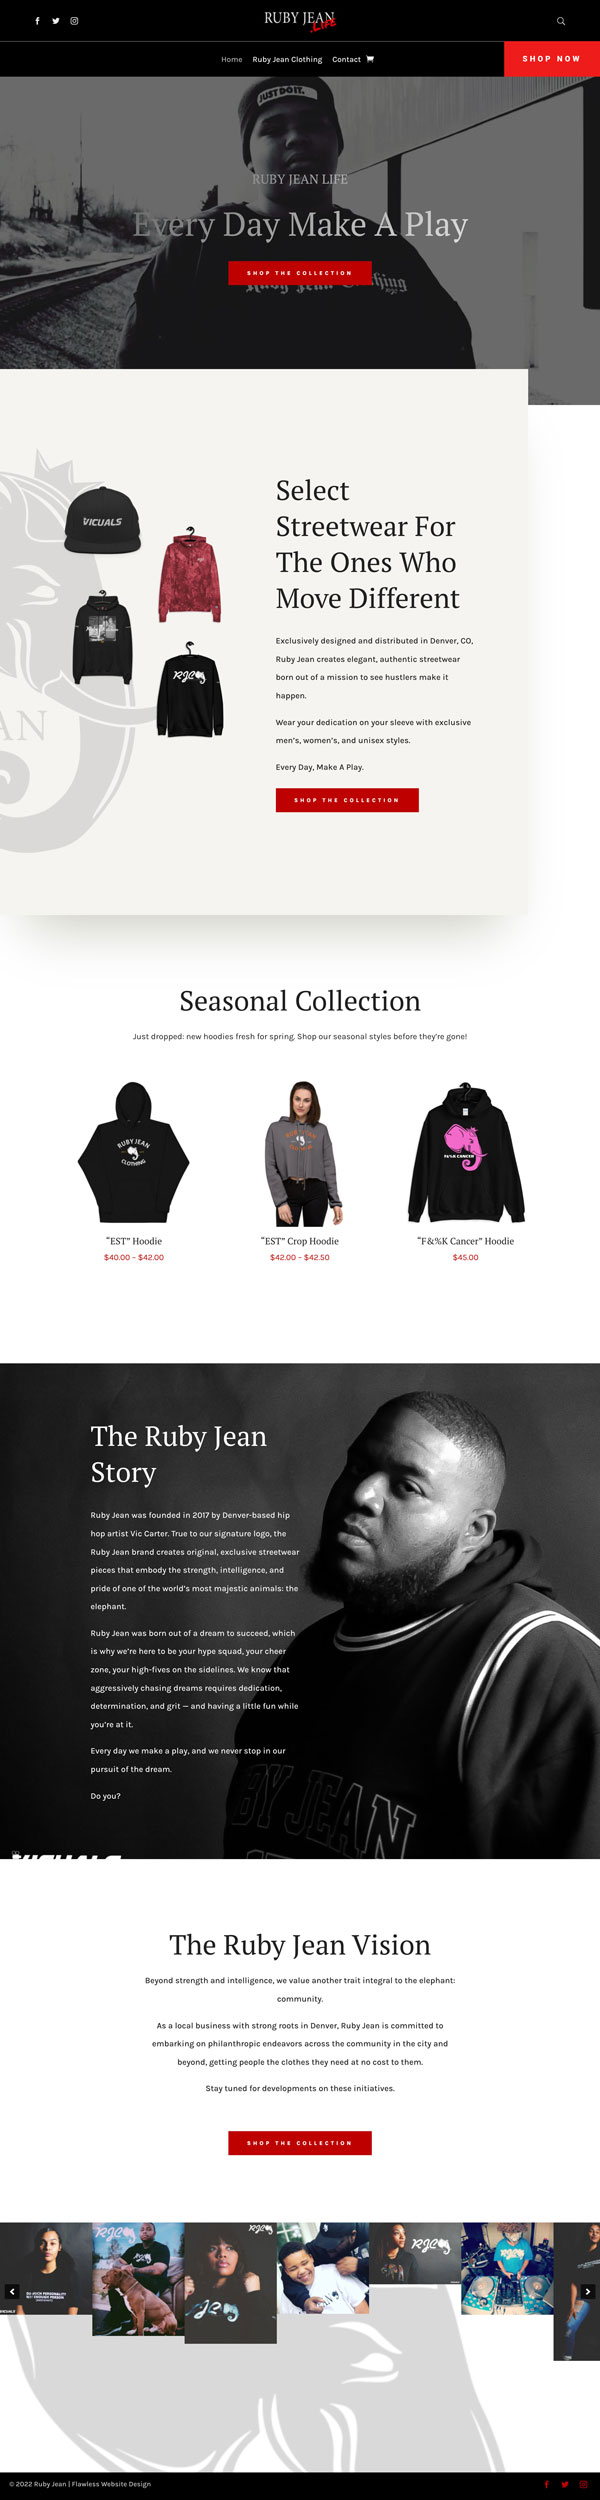 Ruby Jean Website Design